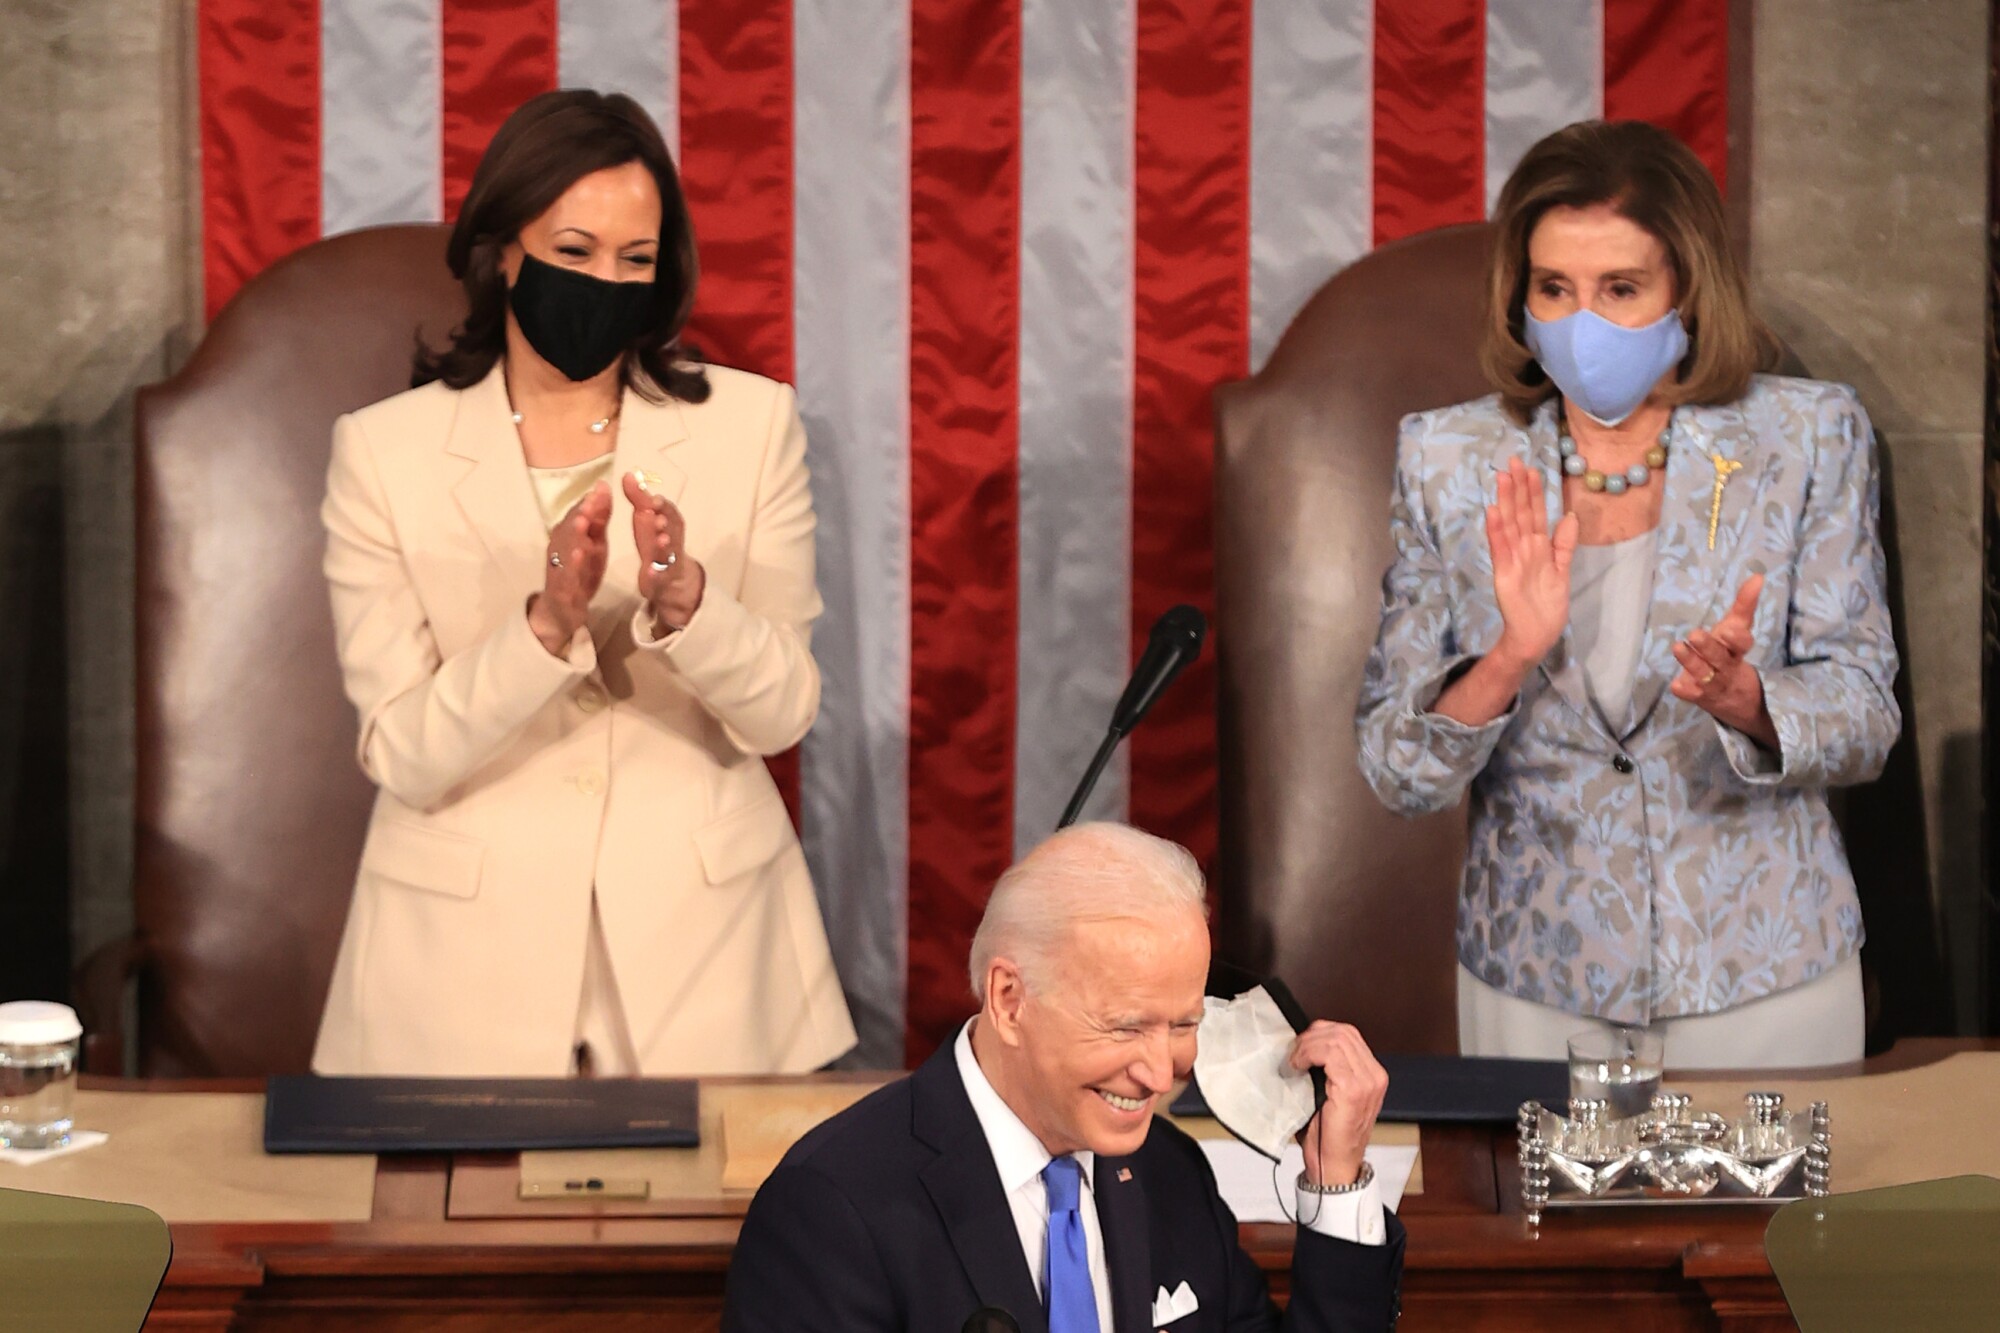 President Biden smiles as two women stand behind him.